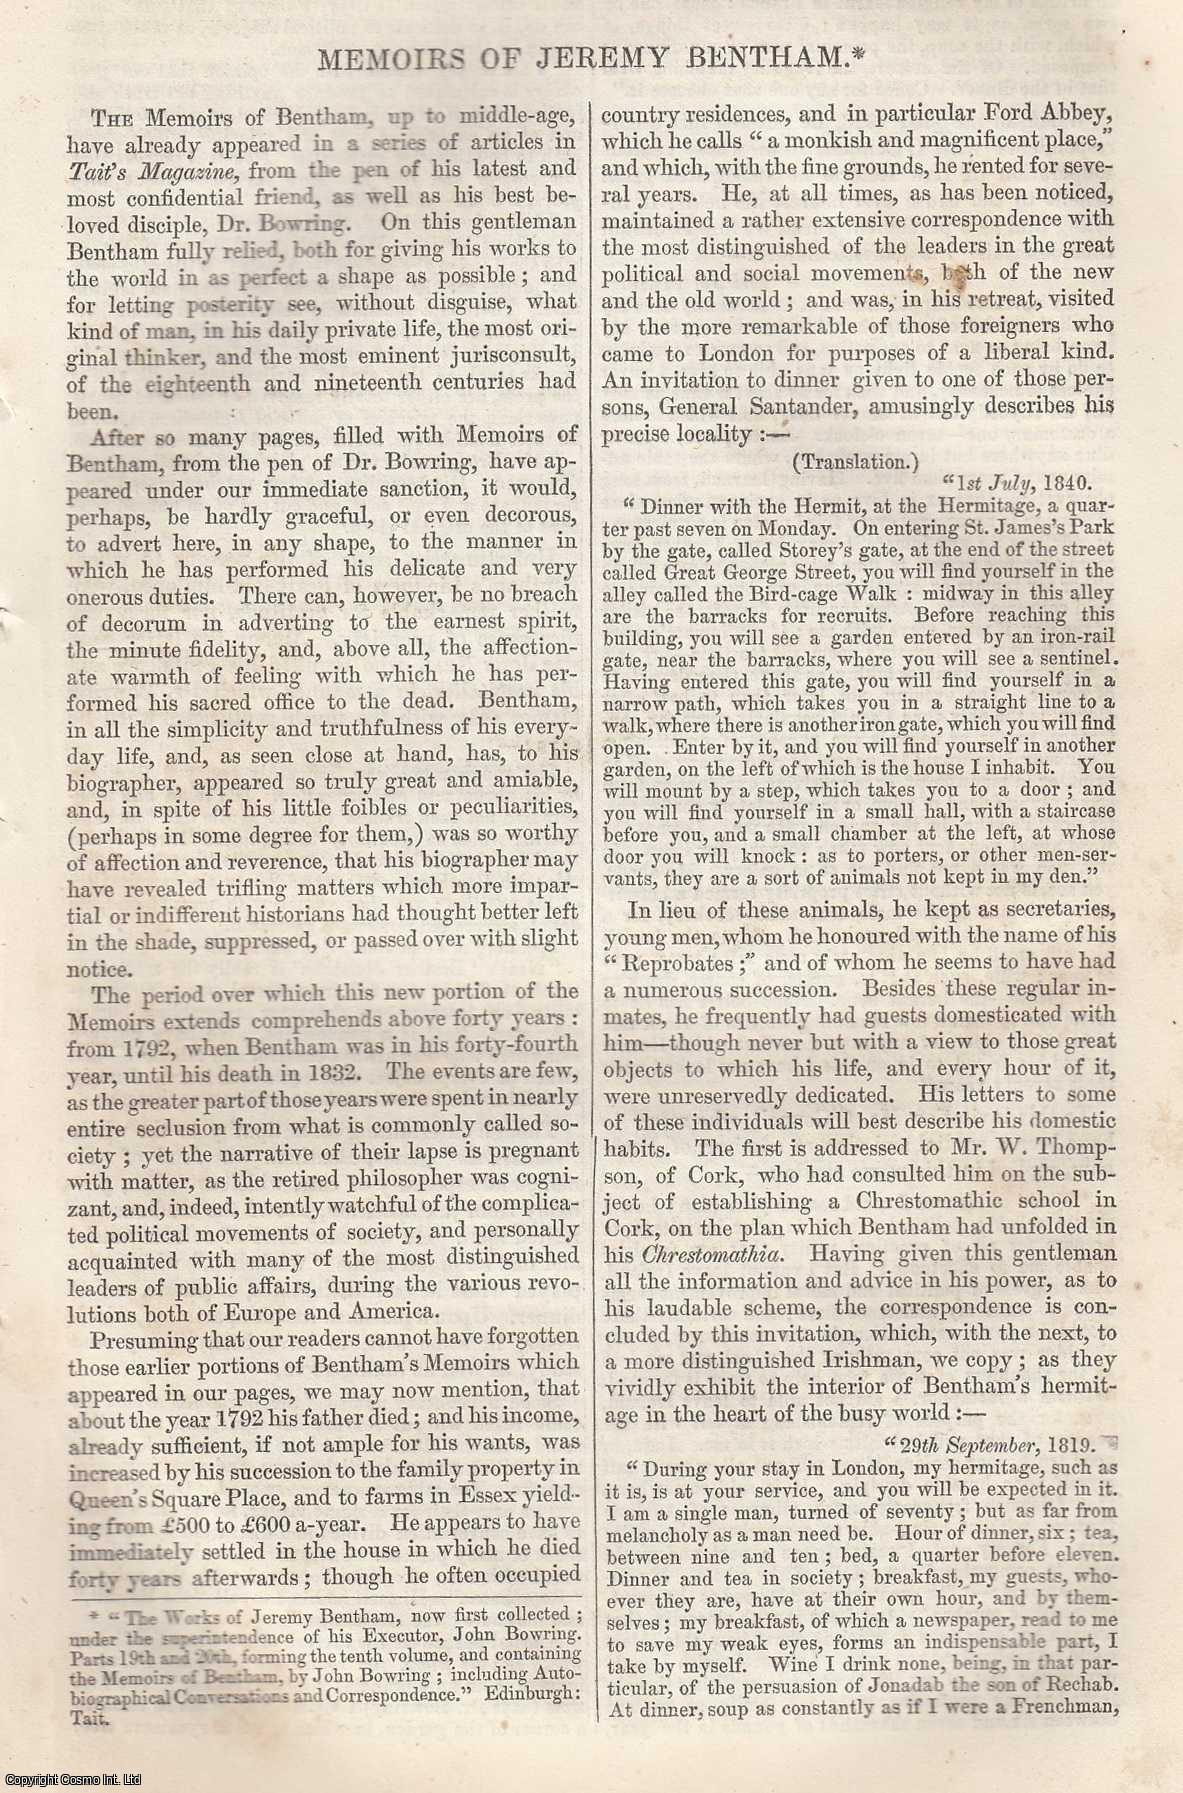 Johnstone, Christian - Bentham's Table Talk. Memoirs of Jeremy Bentham (Part 1). An original article from Tait's Edinburgh Magazine, 1842.